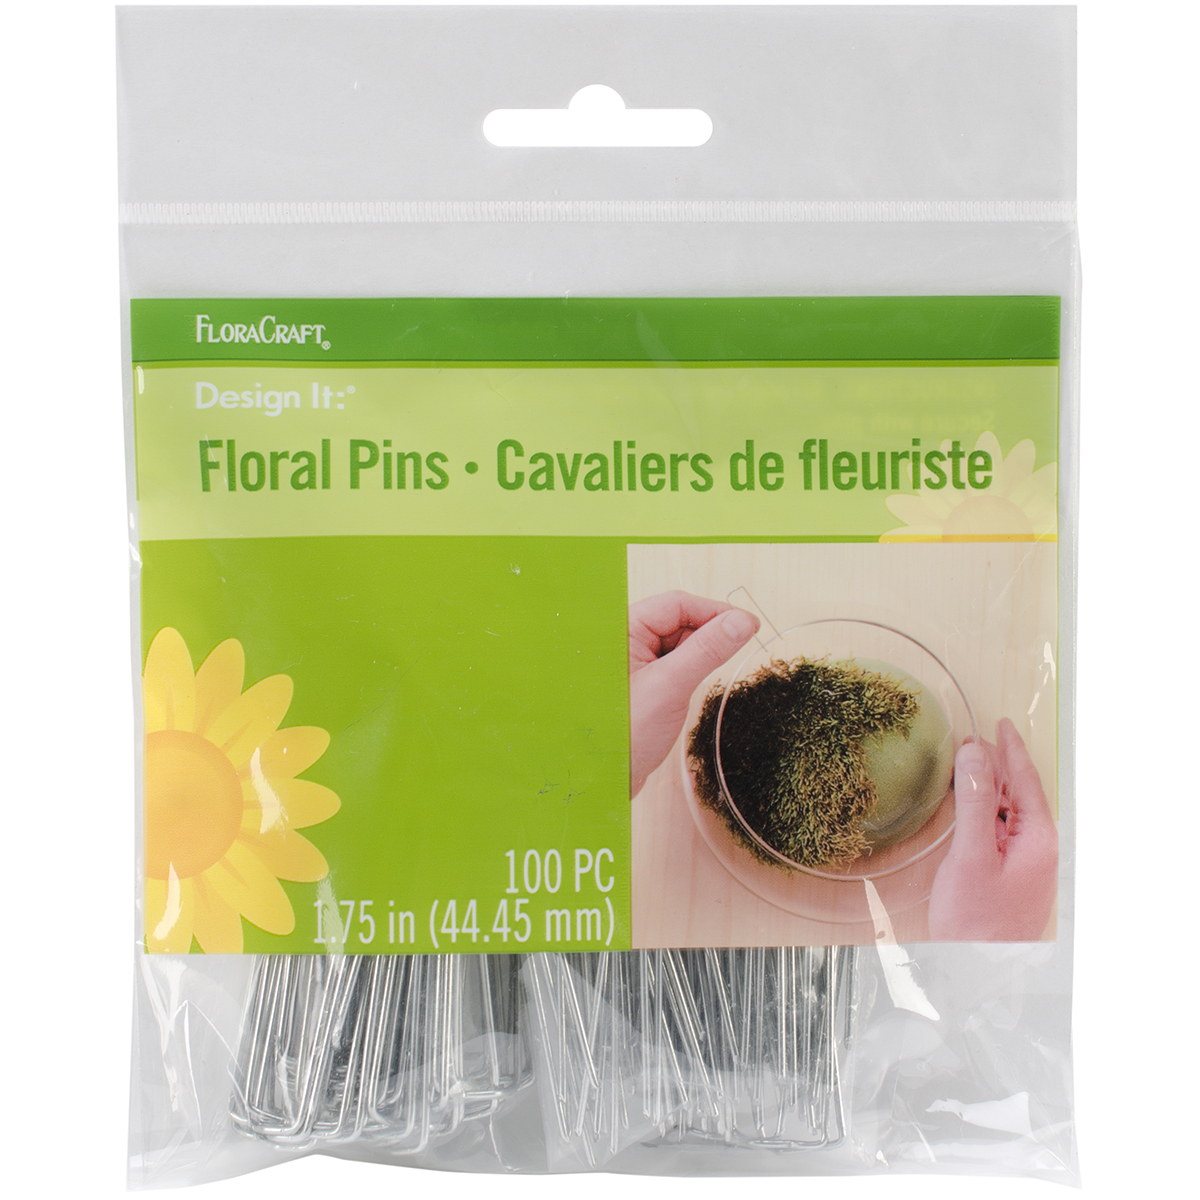 FloraCraft 1.75" Floral Pins, 100 Piece - image 1 of 2